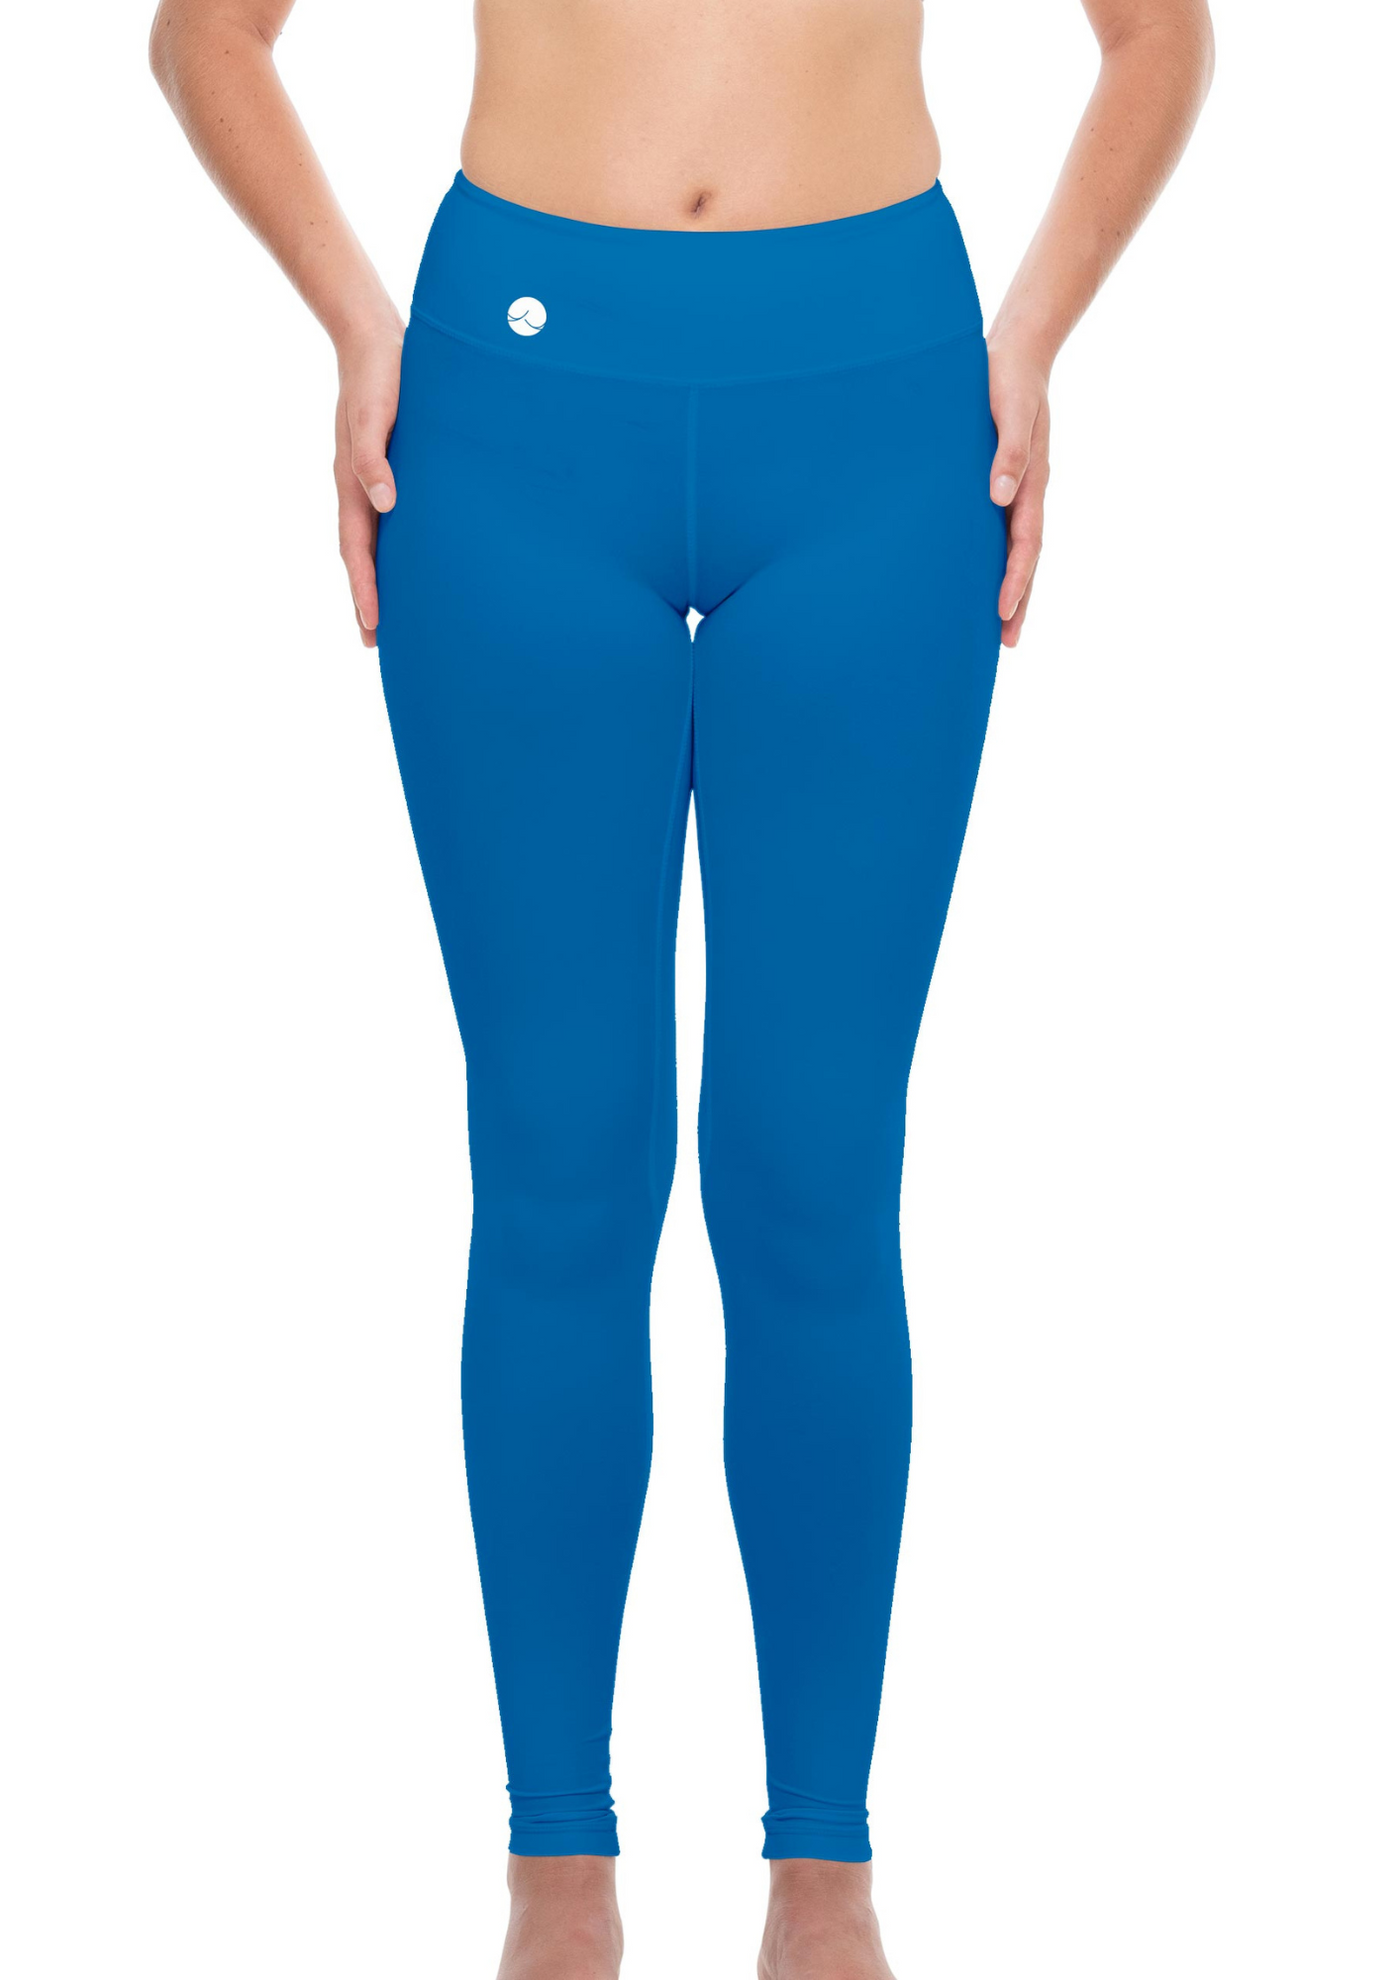 Women's Bluebird Bright Blue Paddle Pants (Incl. Seat Pad)